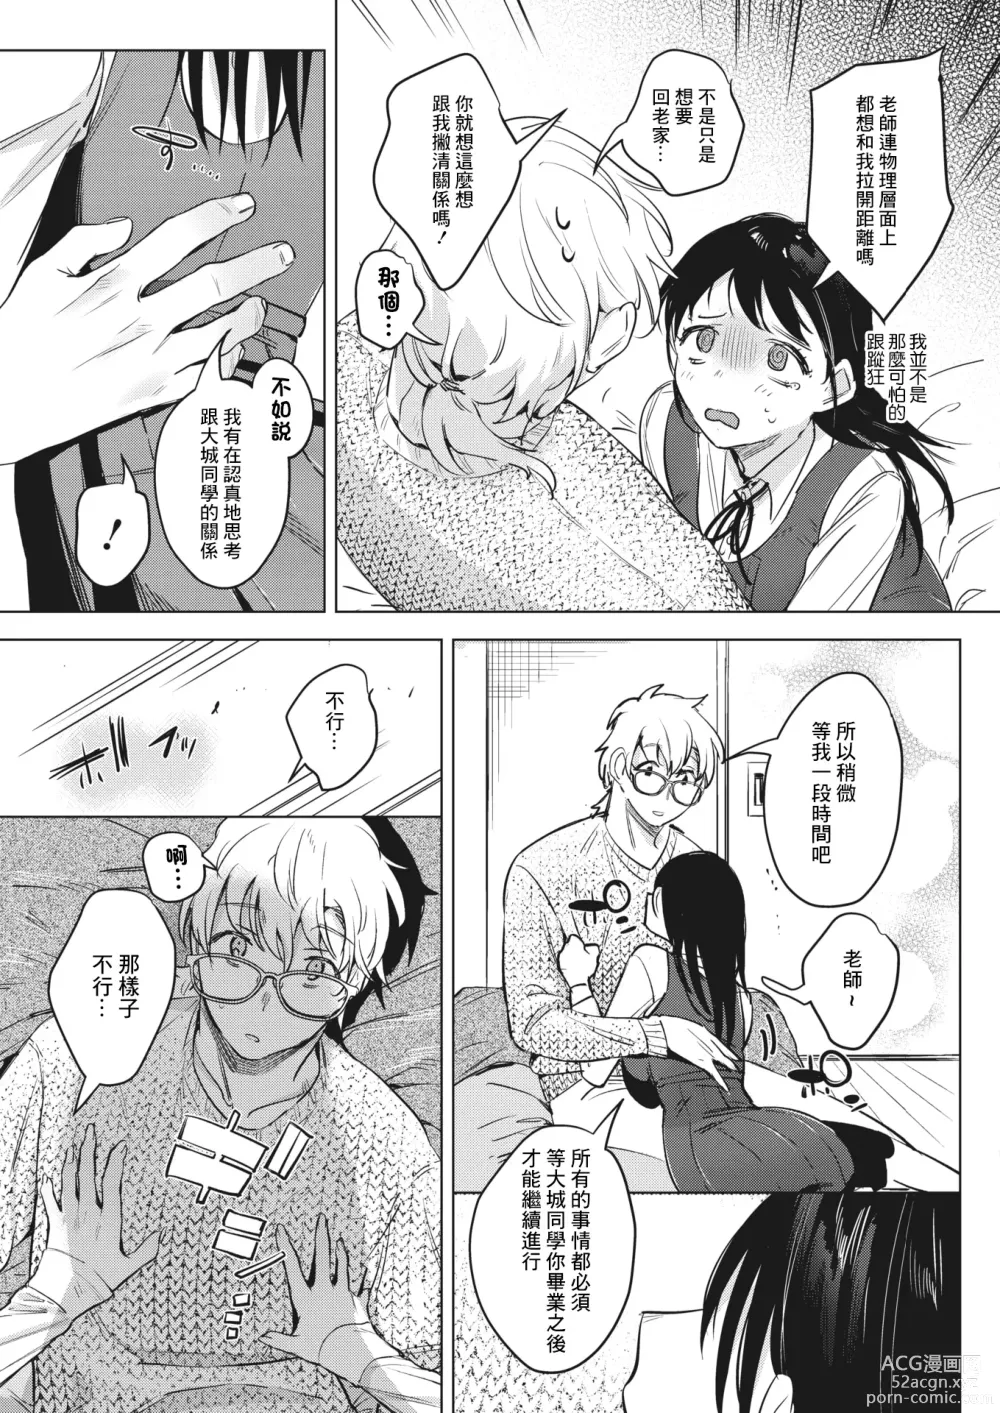 Page 3 of manga 秘密的保健室after